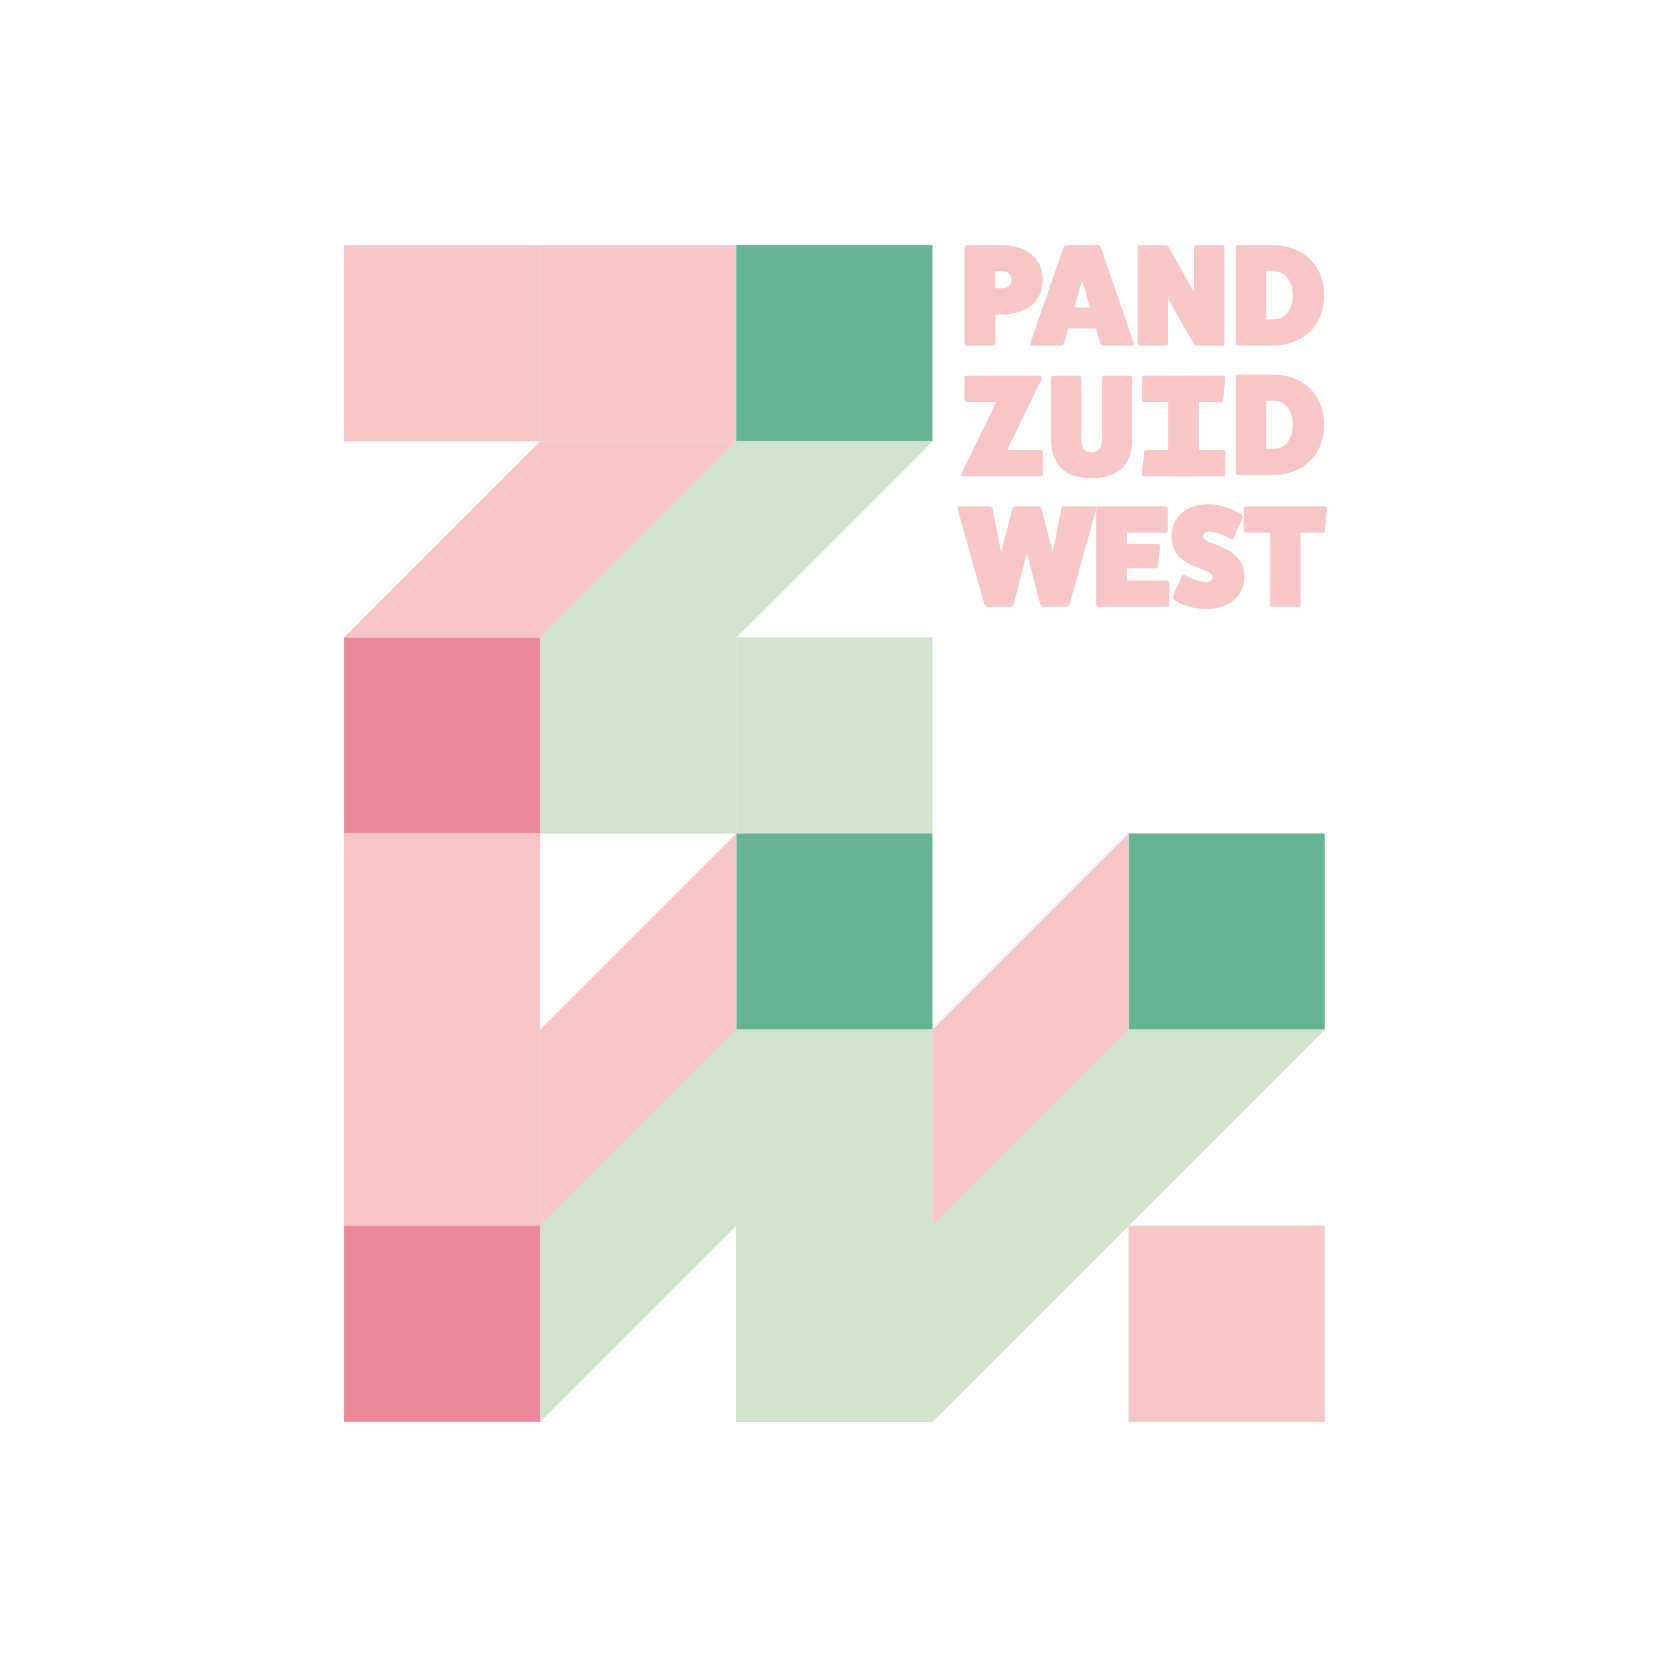 pand zuid west logo set-1.png